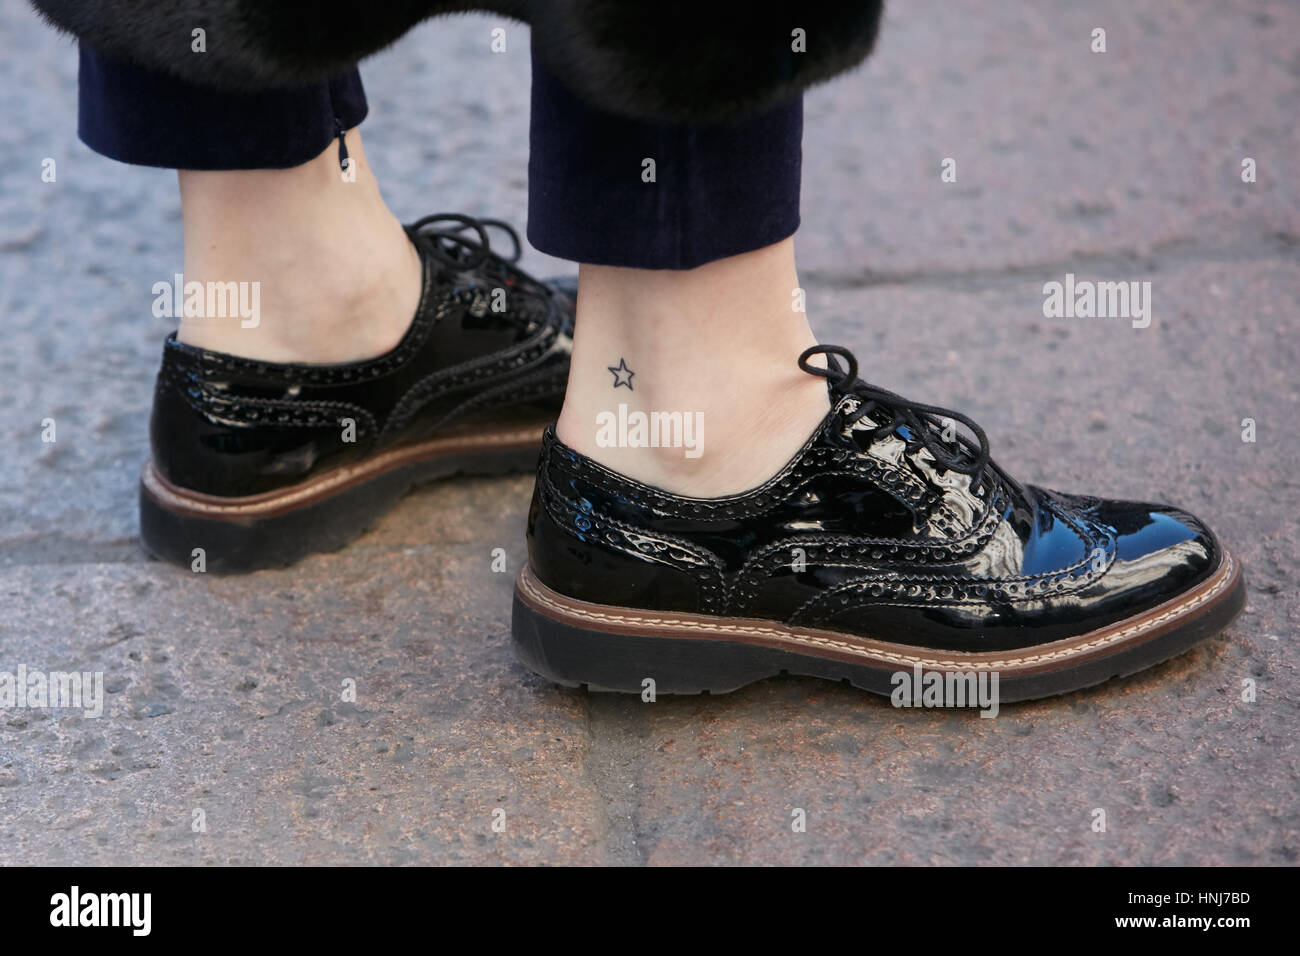 Clarks ORIGINALS Zapatos de gamuza Coal London para hombre